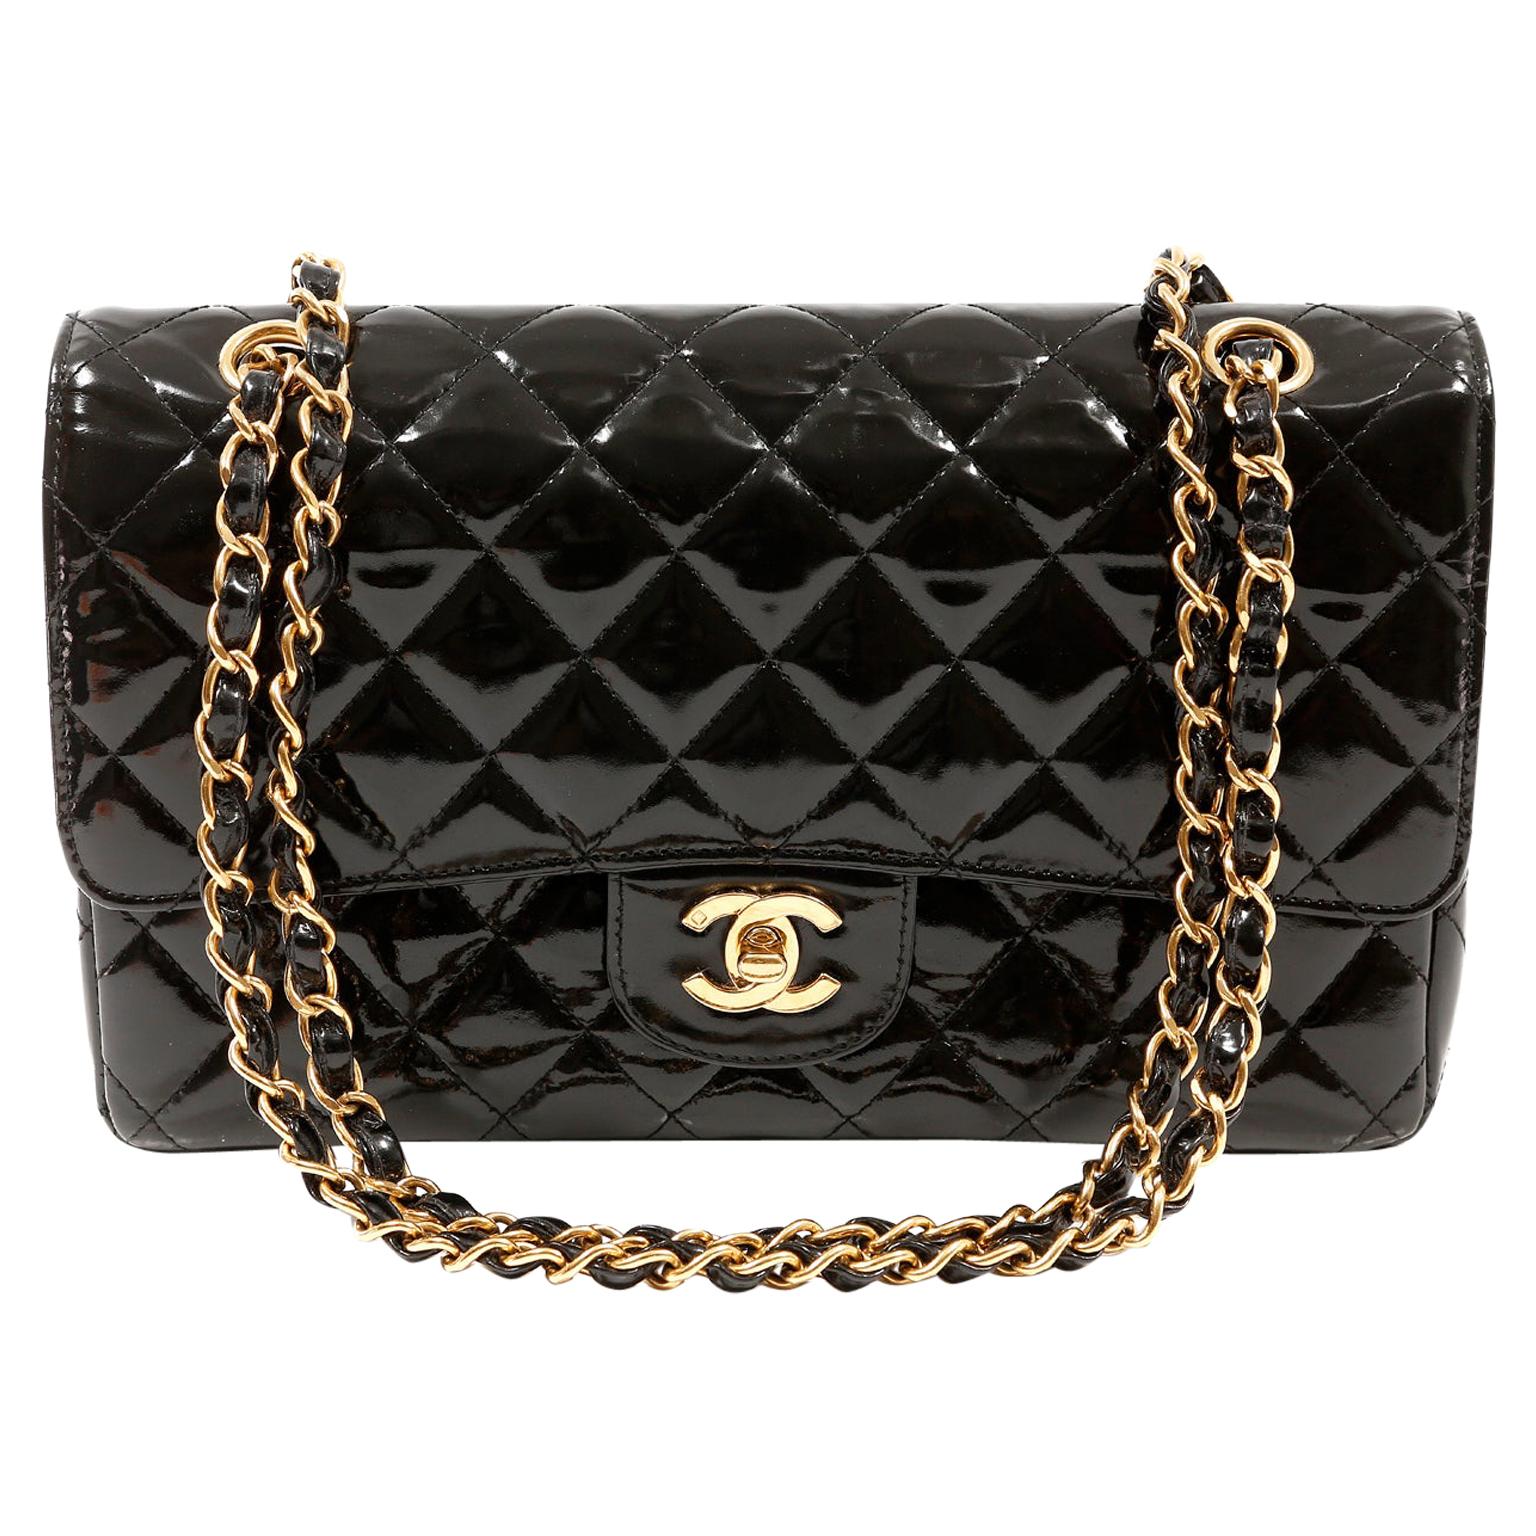 Chanel Black Patent Leather Medium Classic Flap Bag